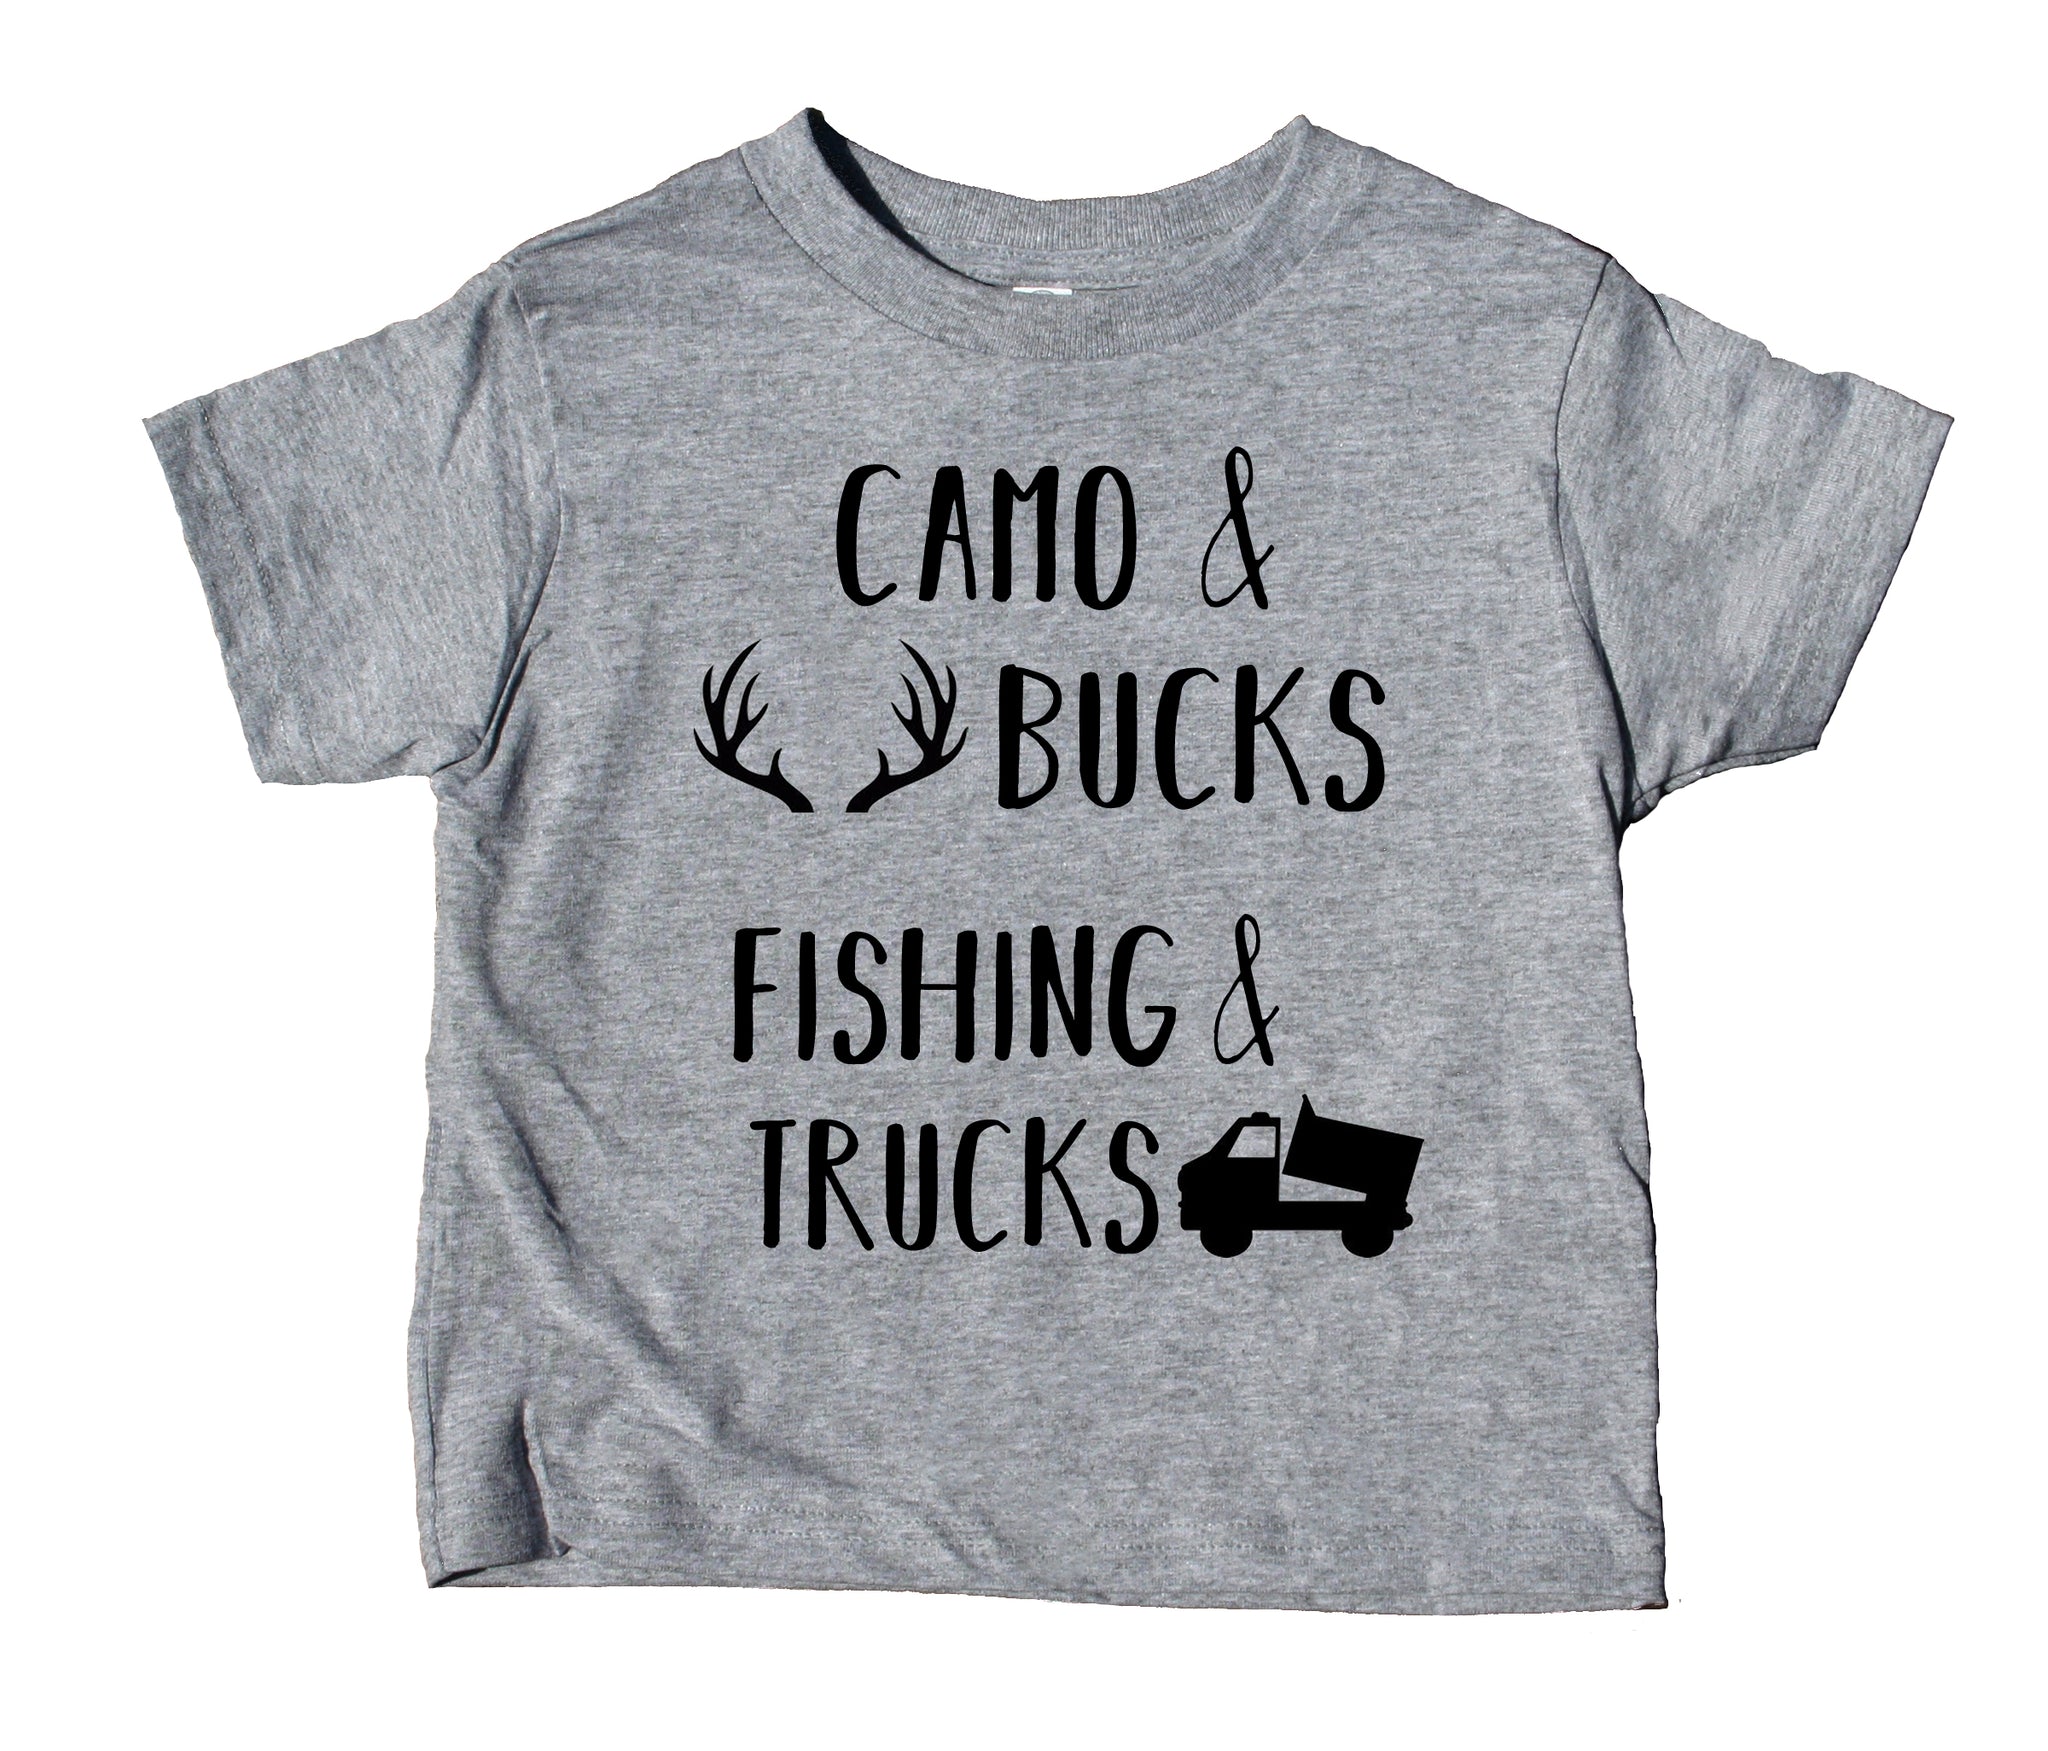 Camo sweatshirt - Shirts & Tops